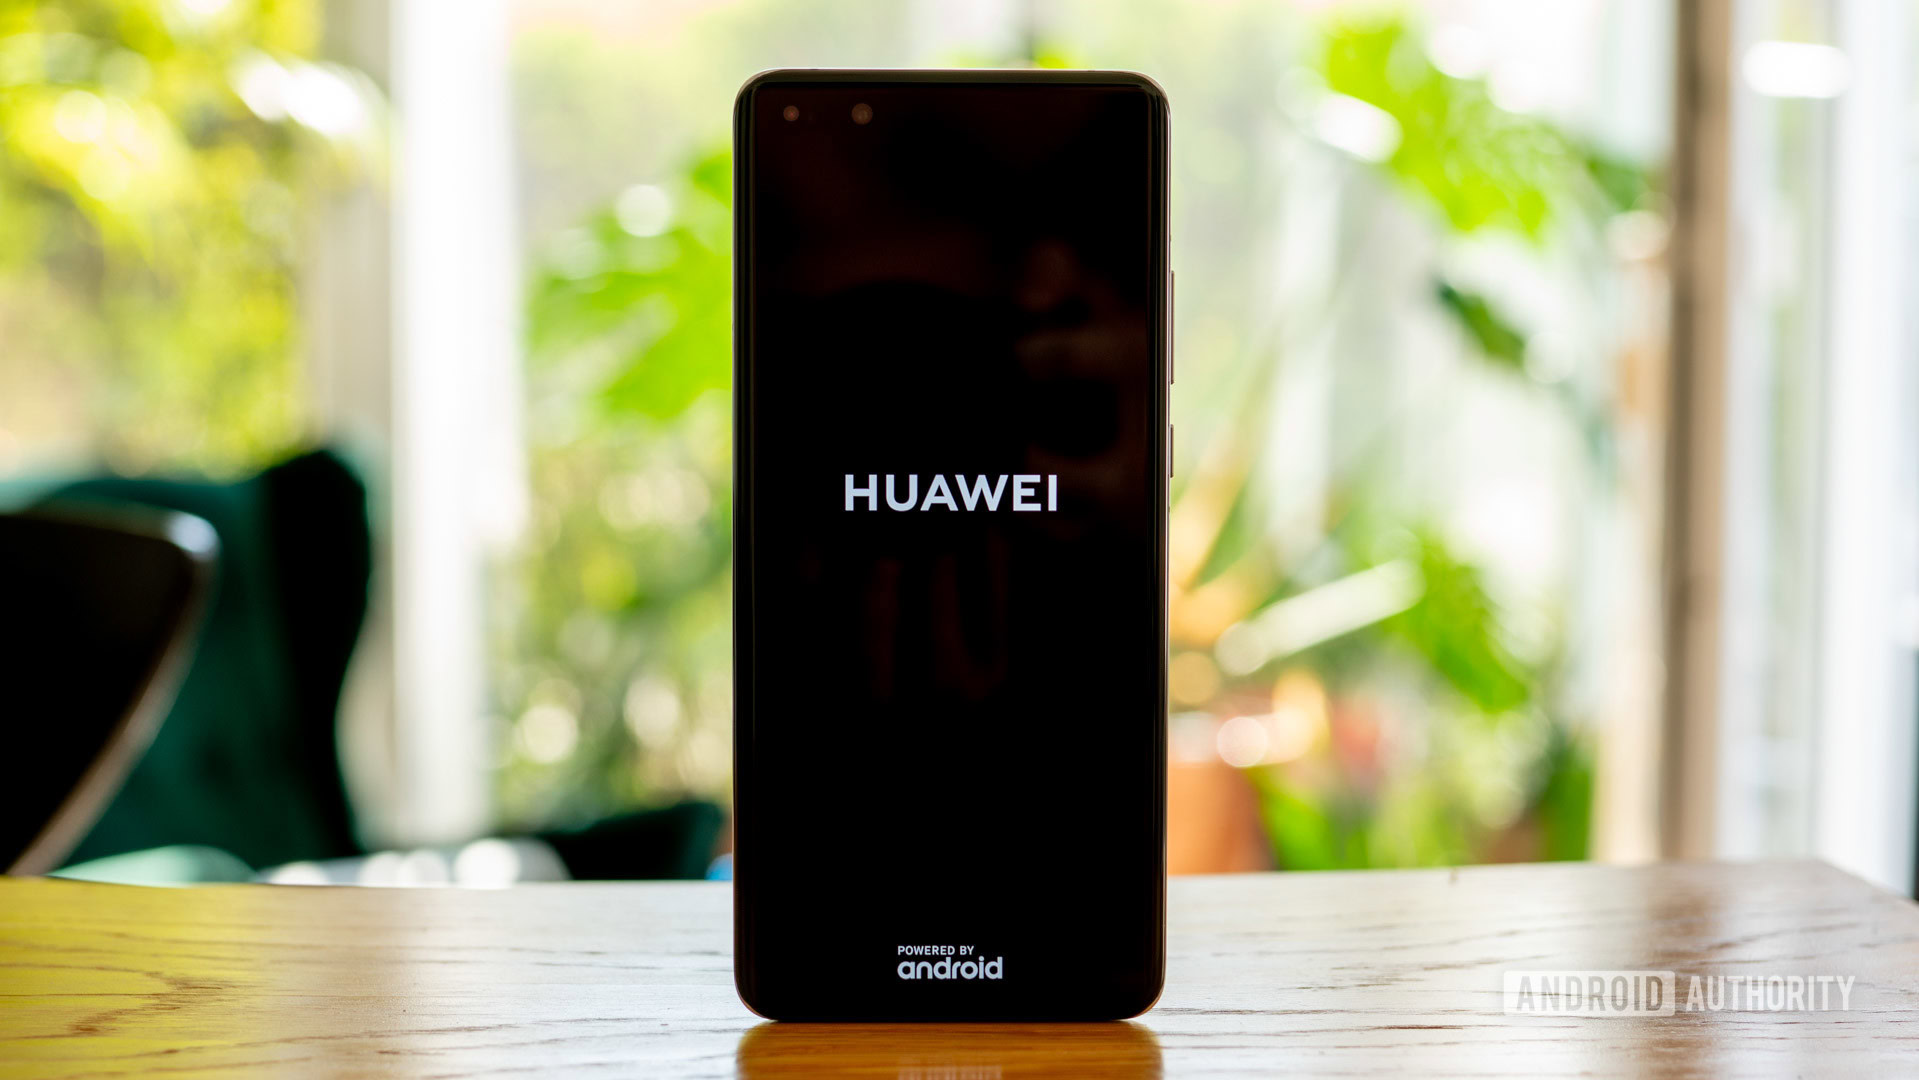 Huawei P40 Pro receiving September 2023 update - Huawei Central